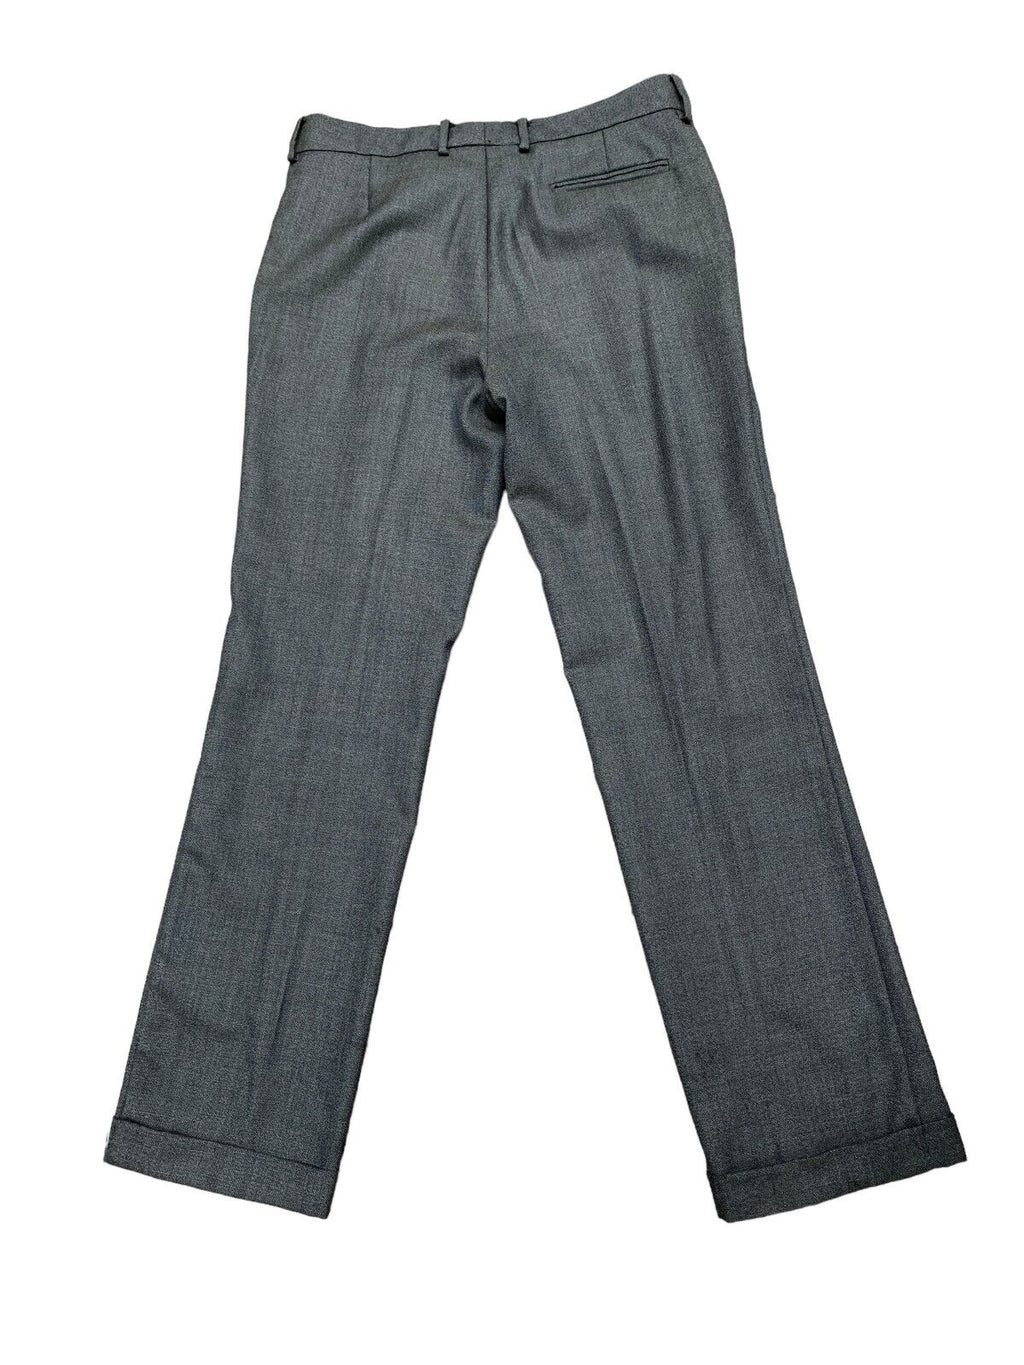 Martin Margiela FW 2001 Grey Wool Pants Size 50 / fits US 34